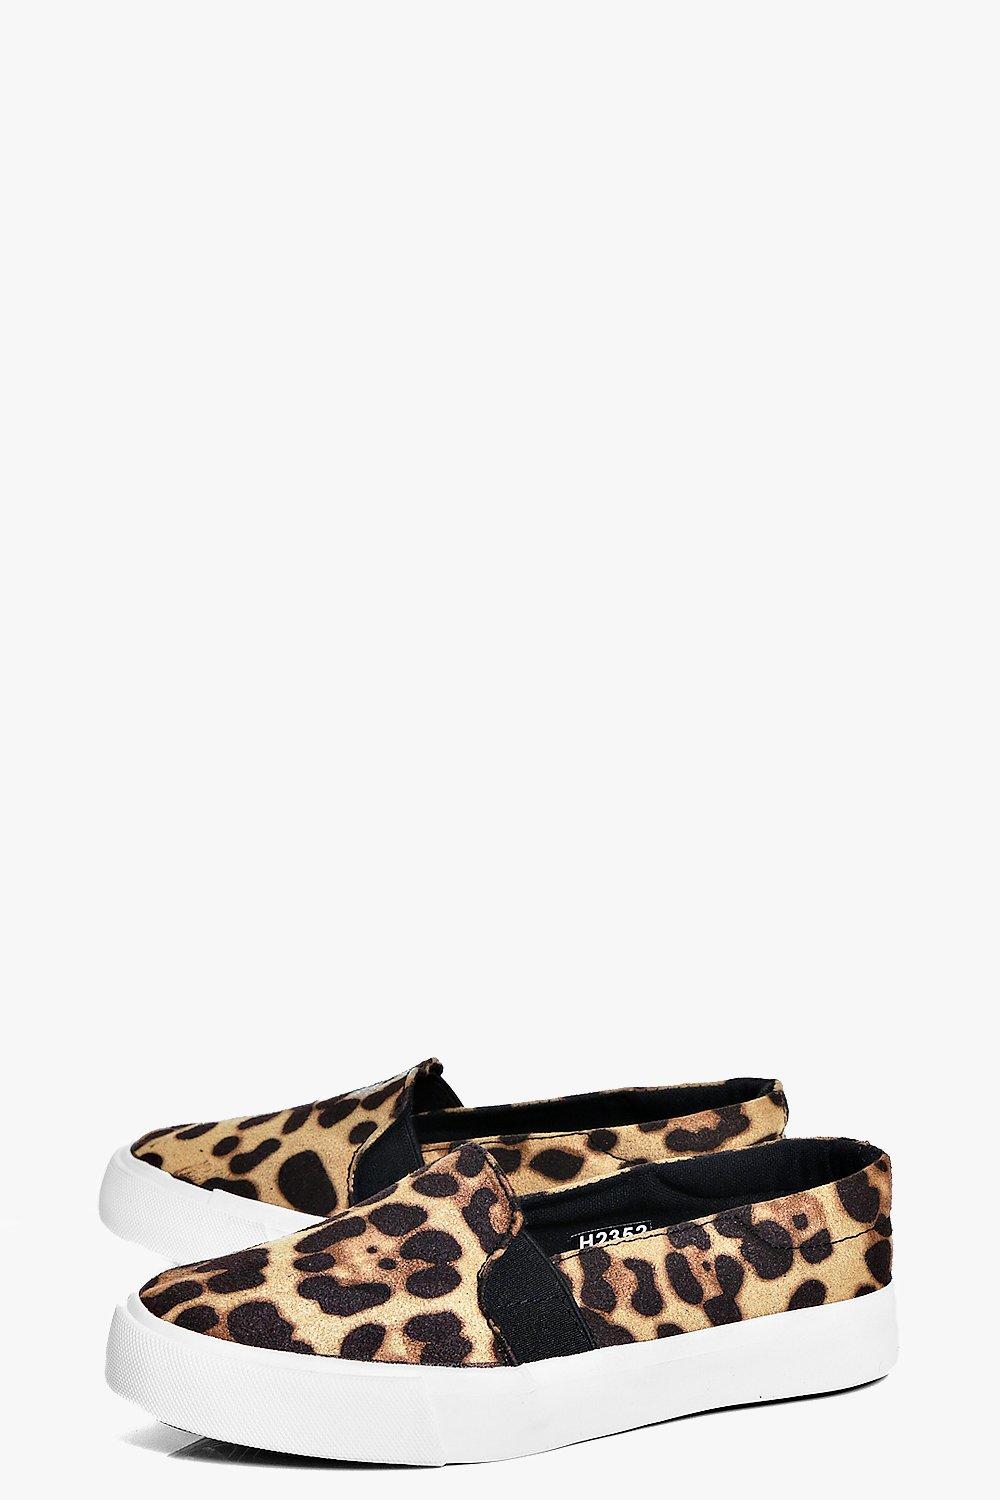 slip on trainers leopard print